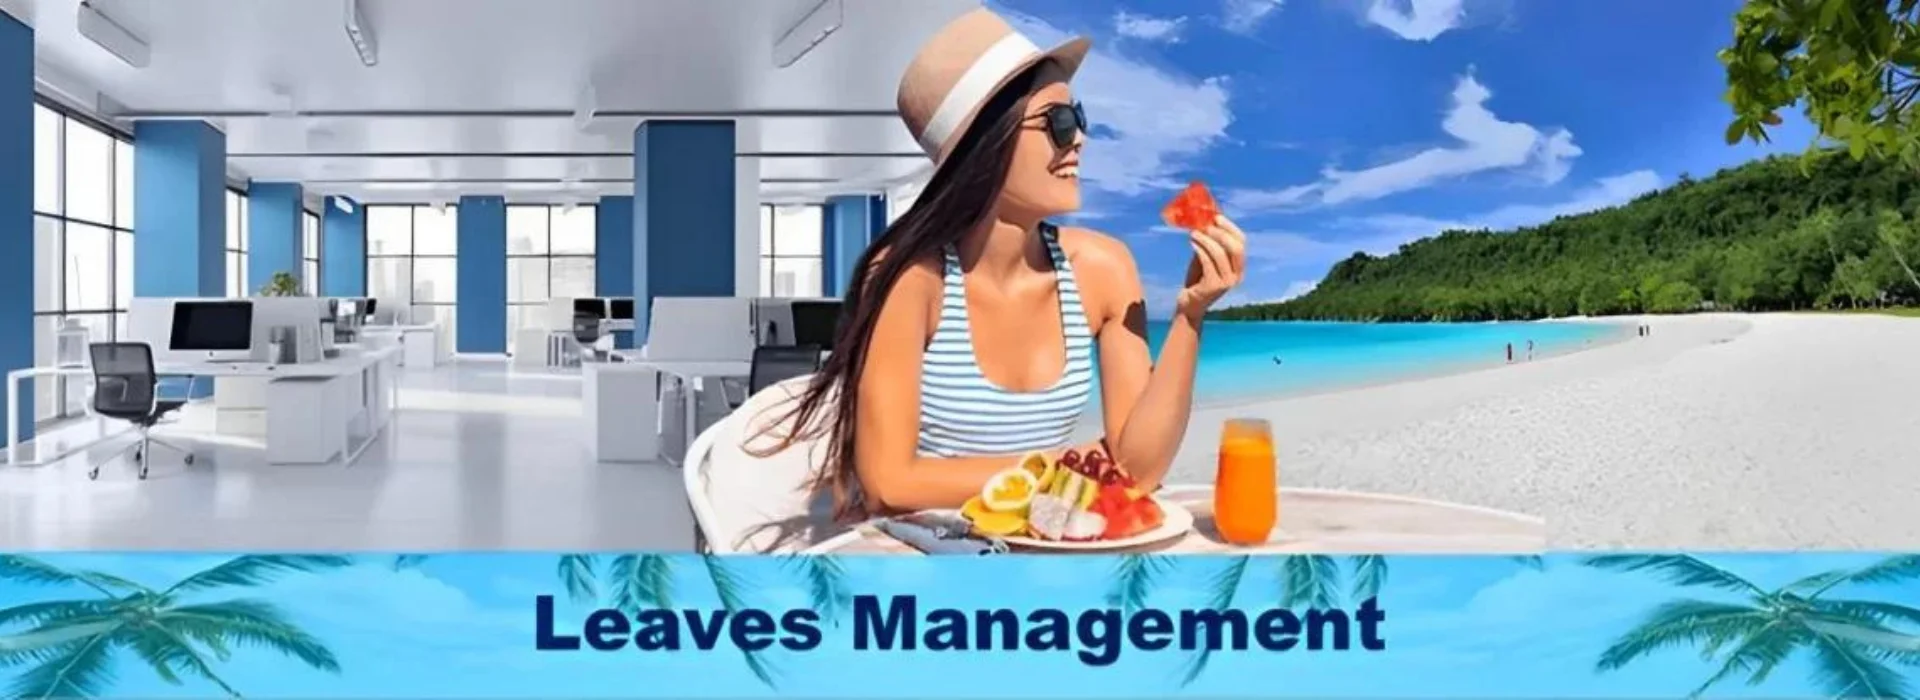 Leave Management